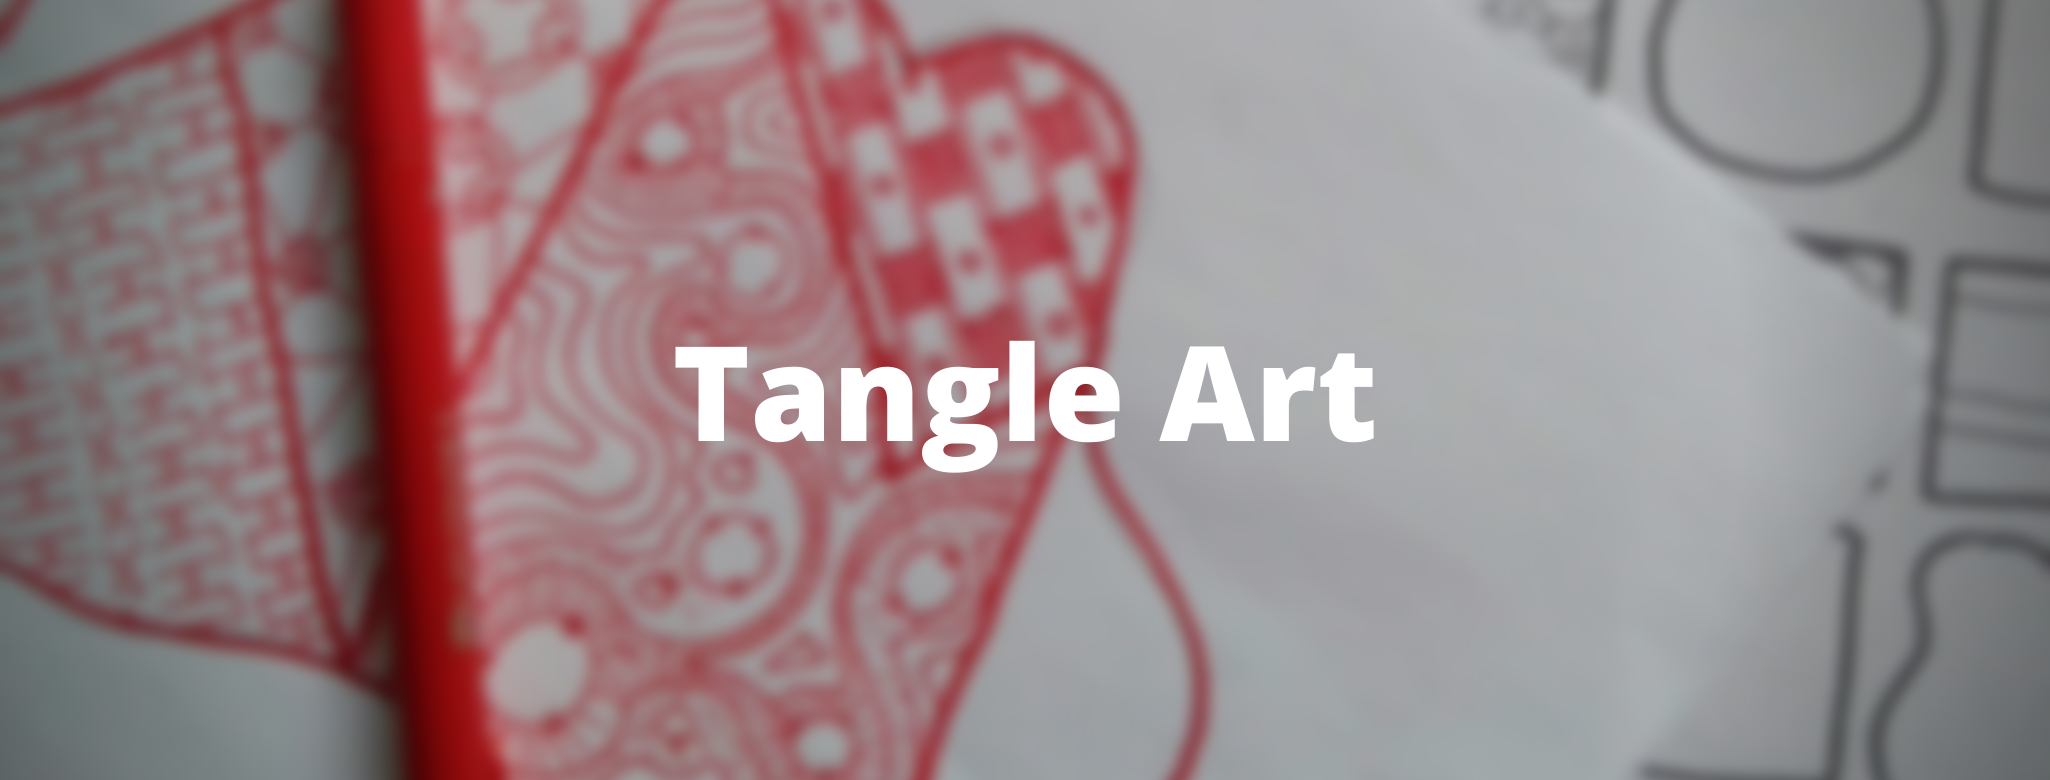 Tangle Art class